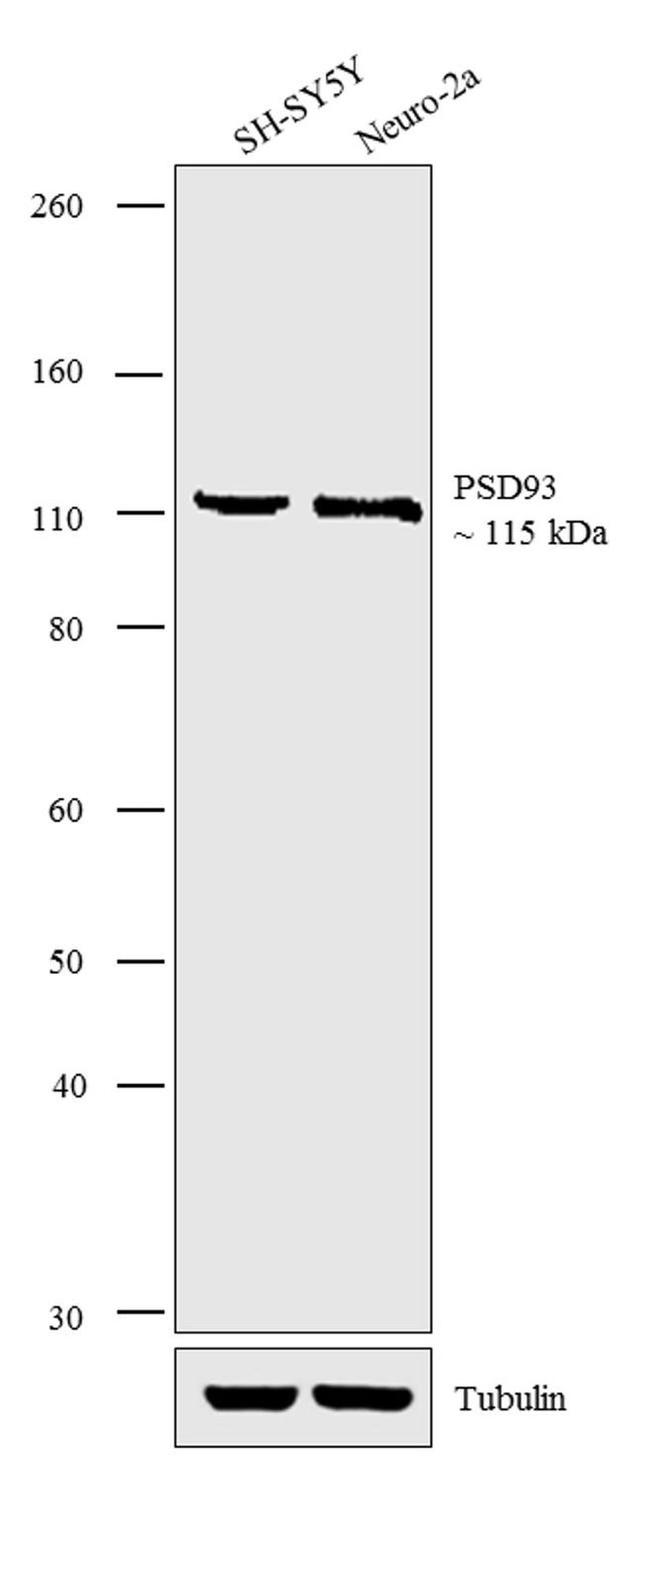 PSD93 Antibody in Western Blot (WB)